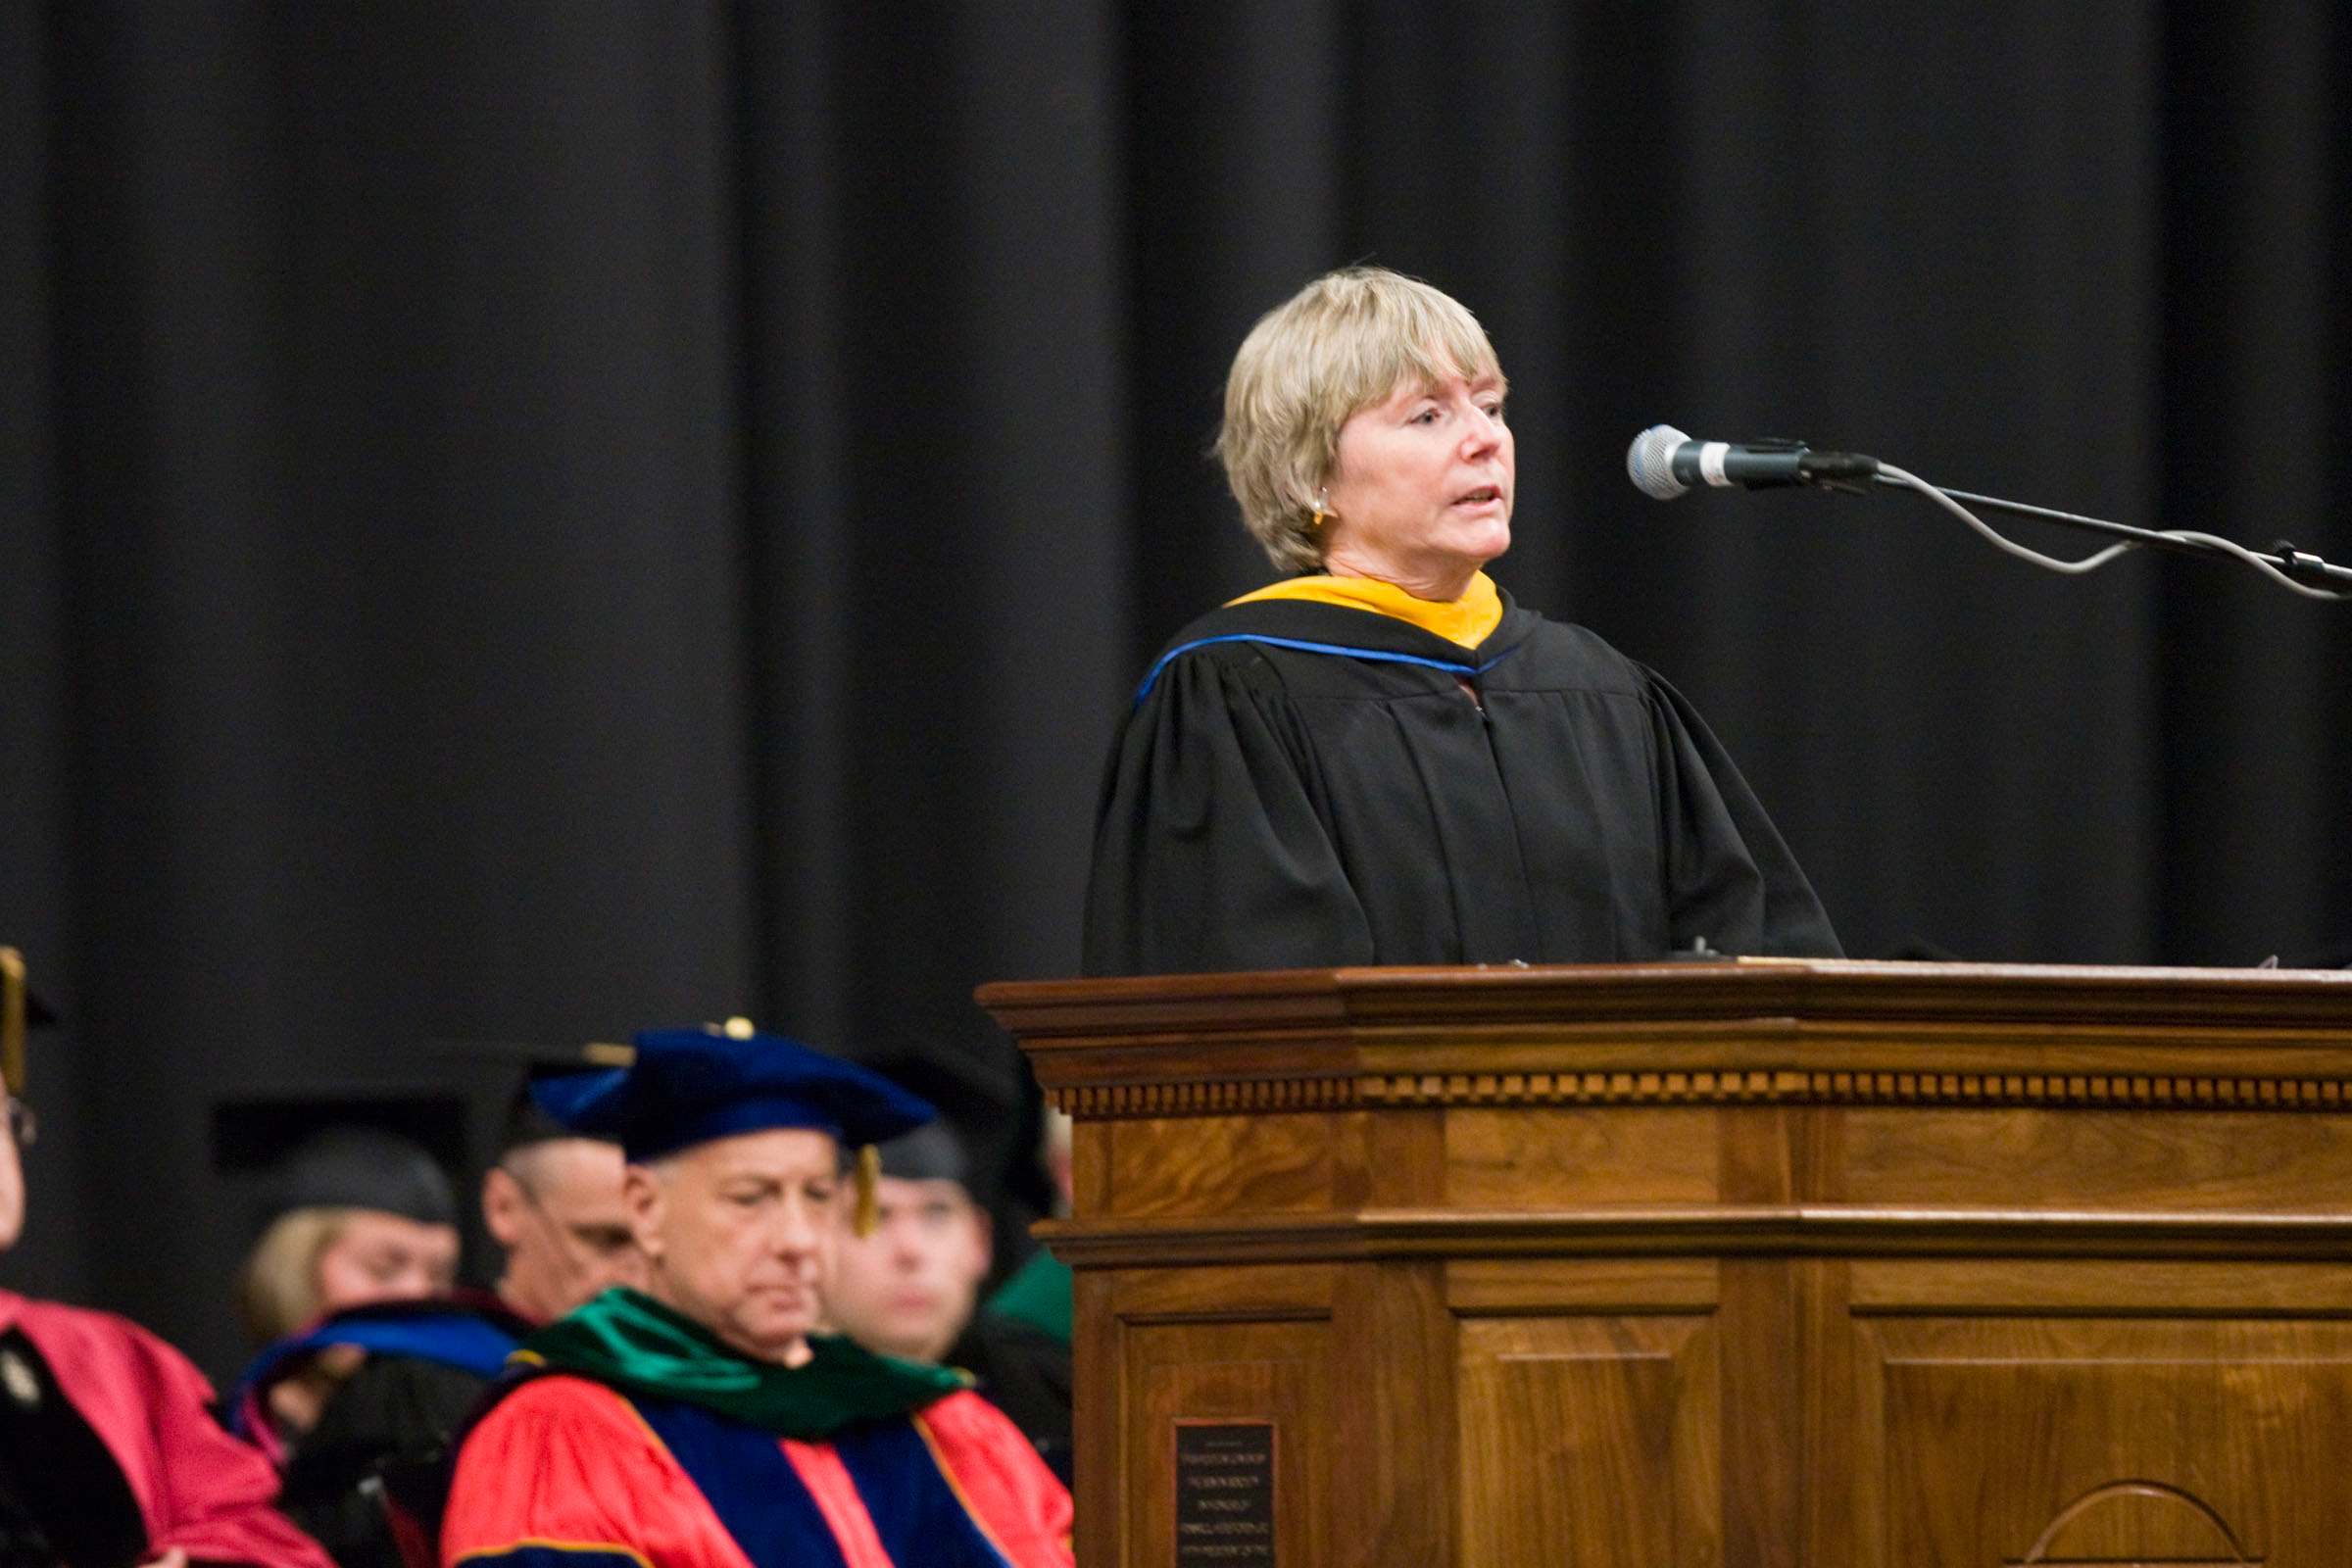 Karin Wittenborg speaking at a podium during graduation